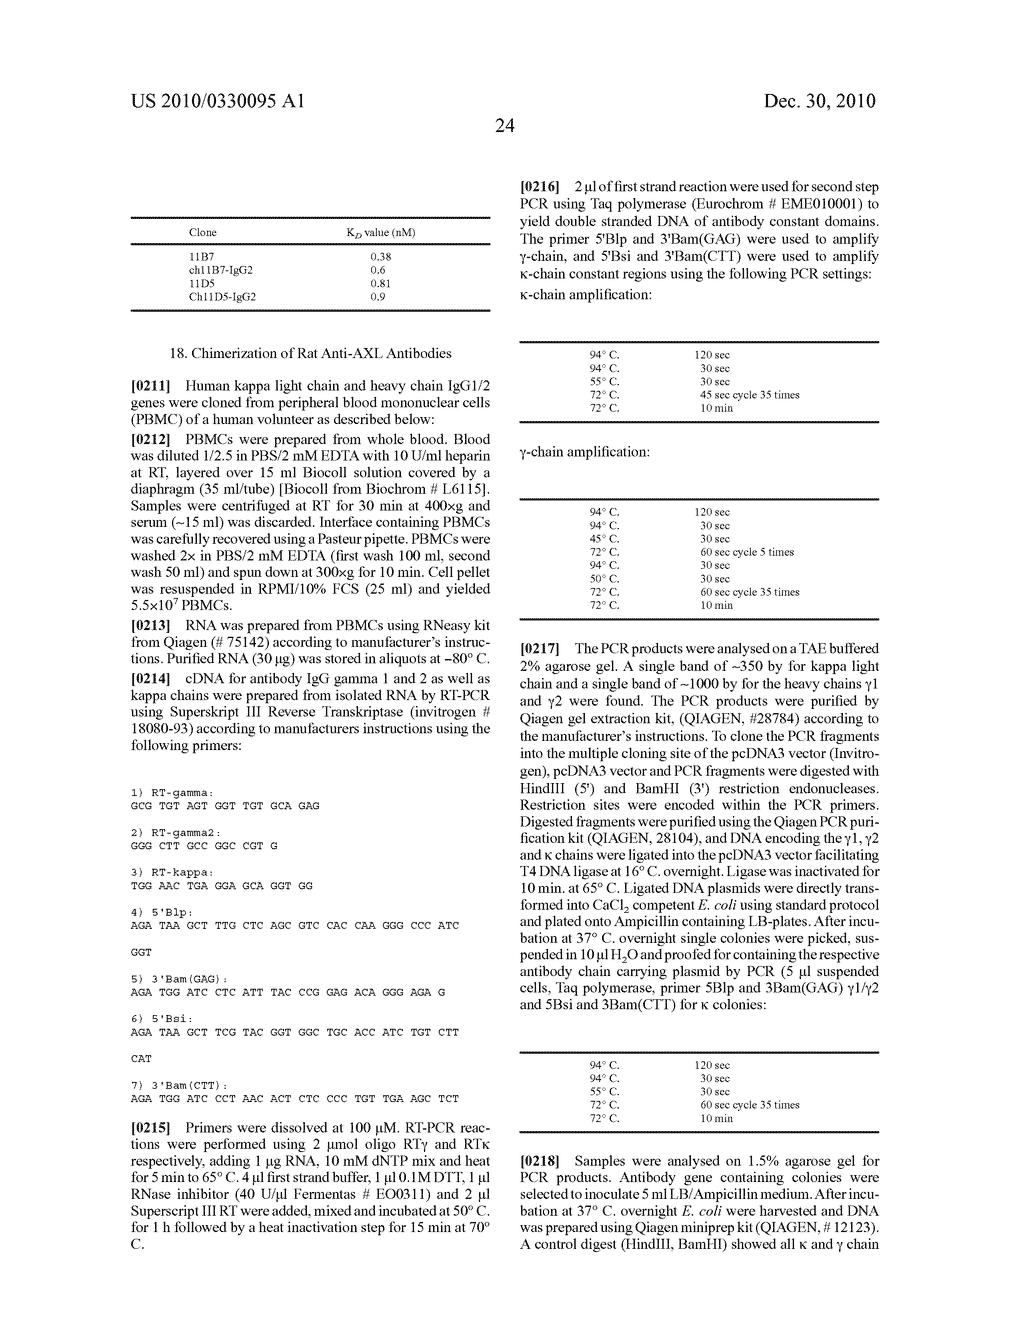 AXL ANTIBODIES - diagram, schematic, and image 45